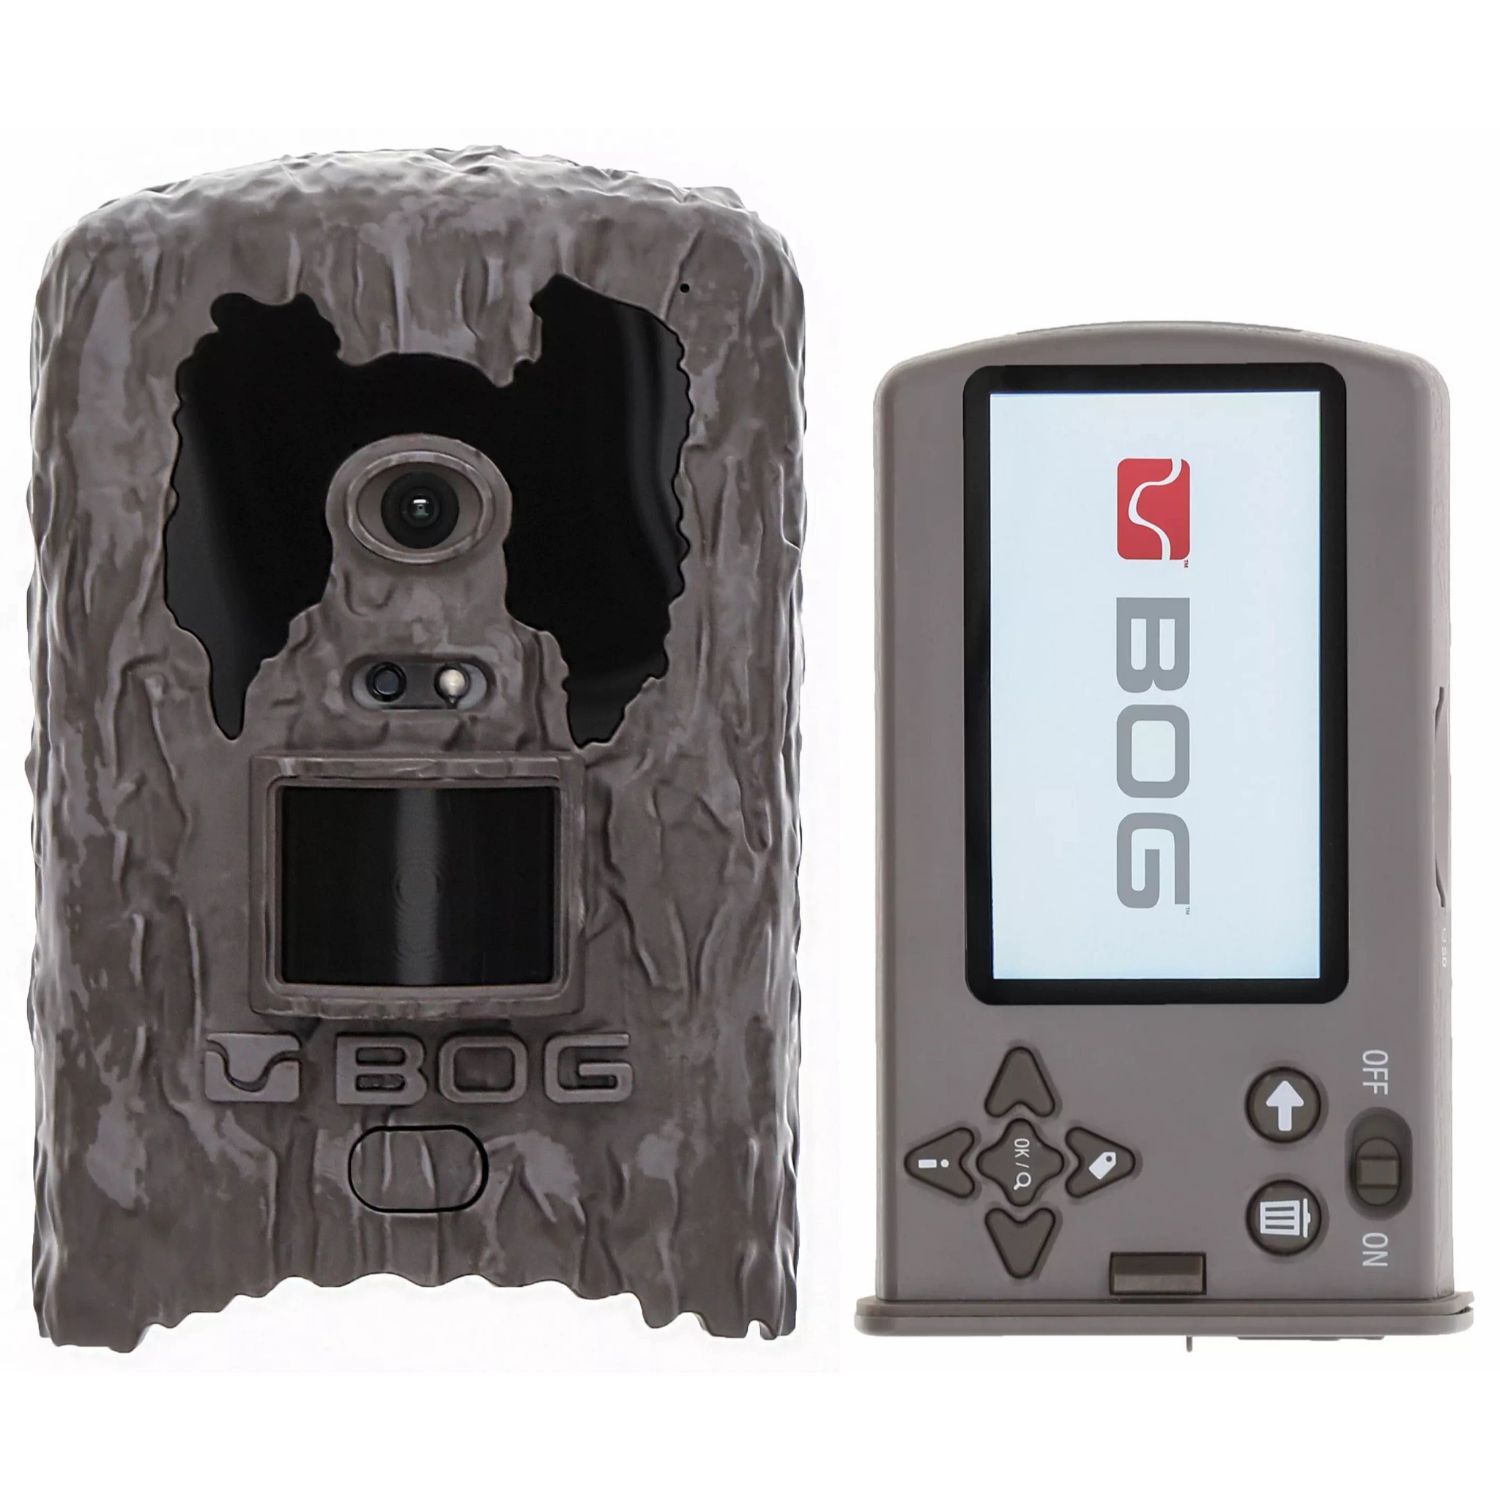 Bog Clandestine 18MP Game Camera 1